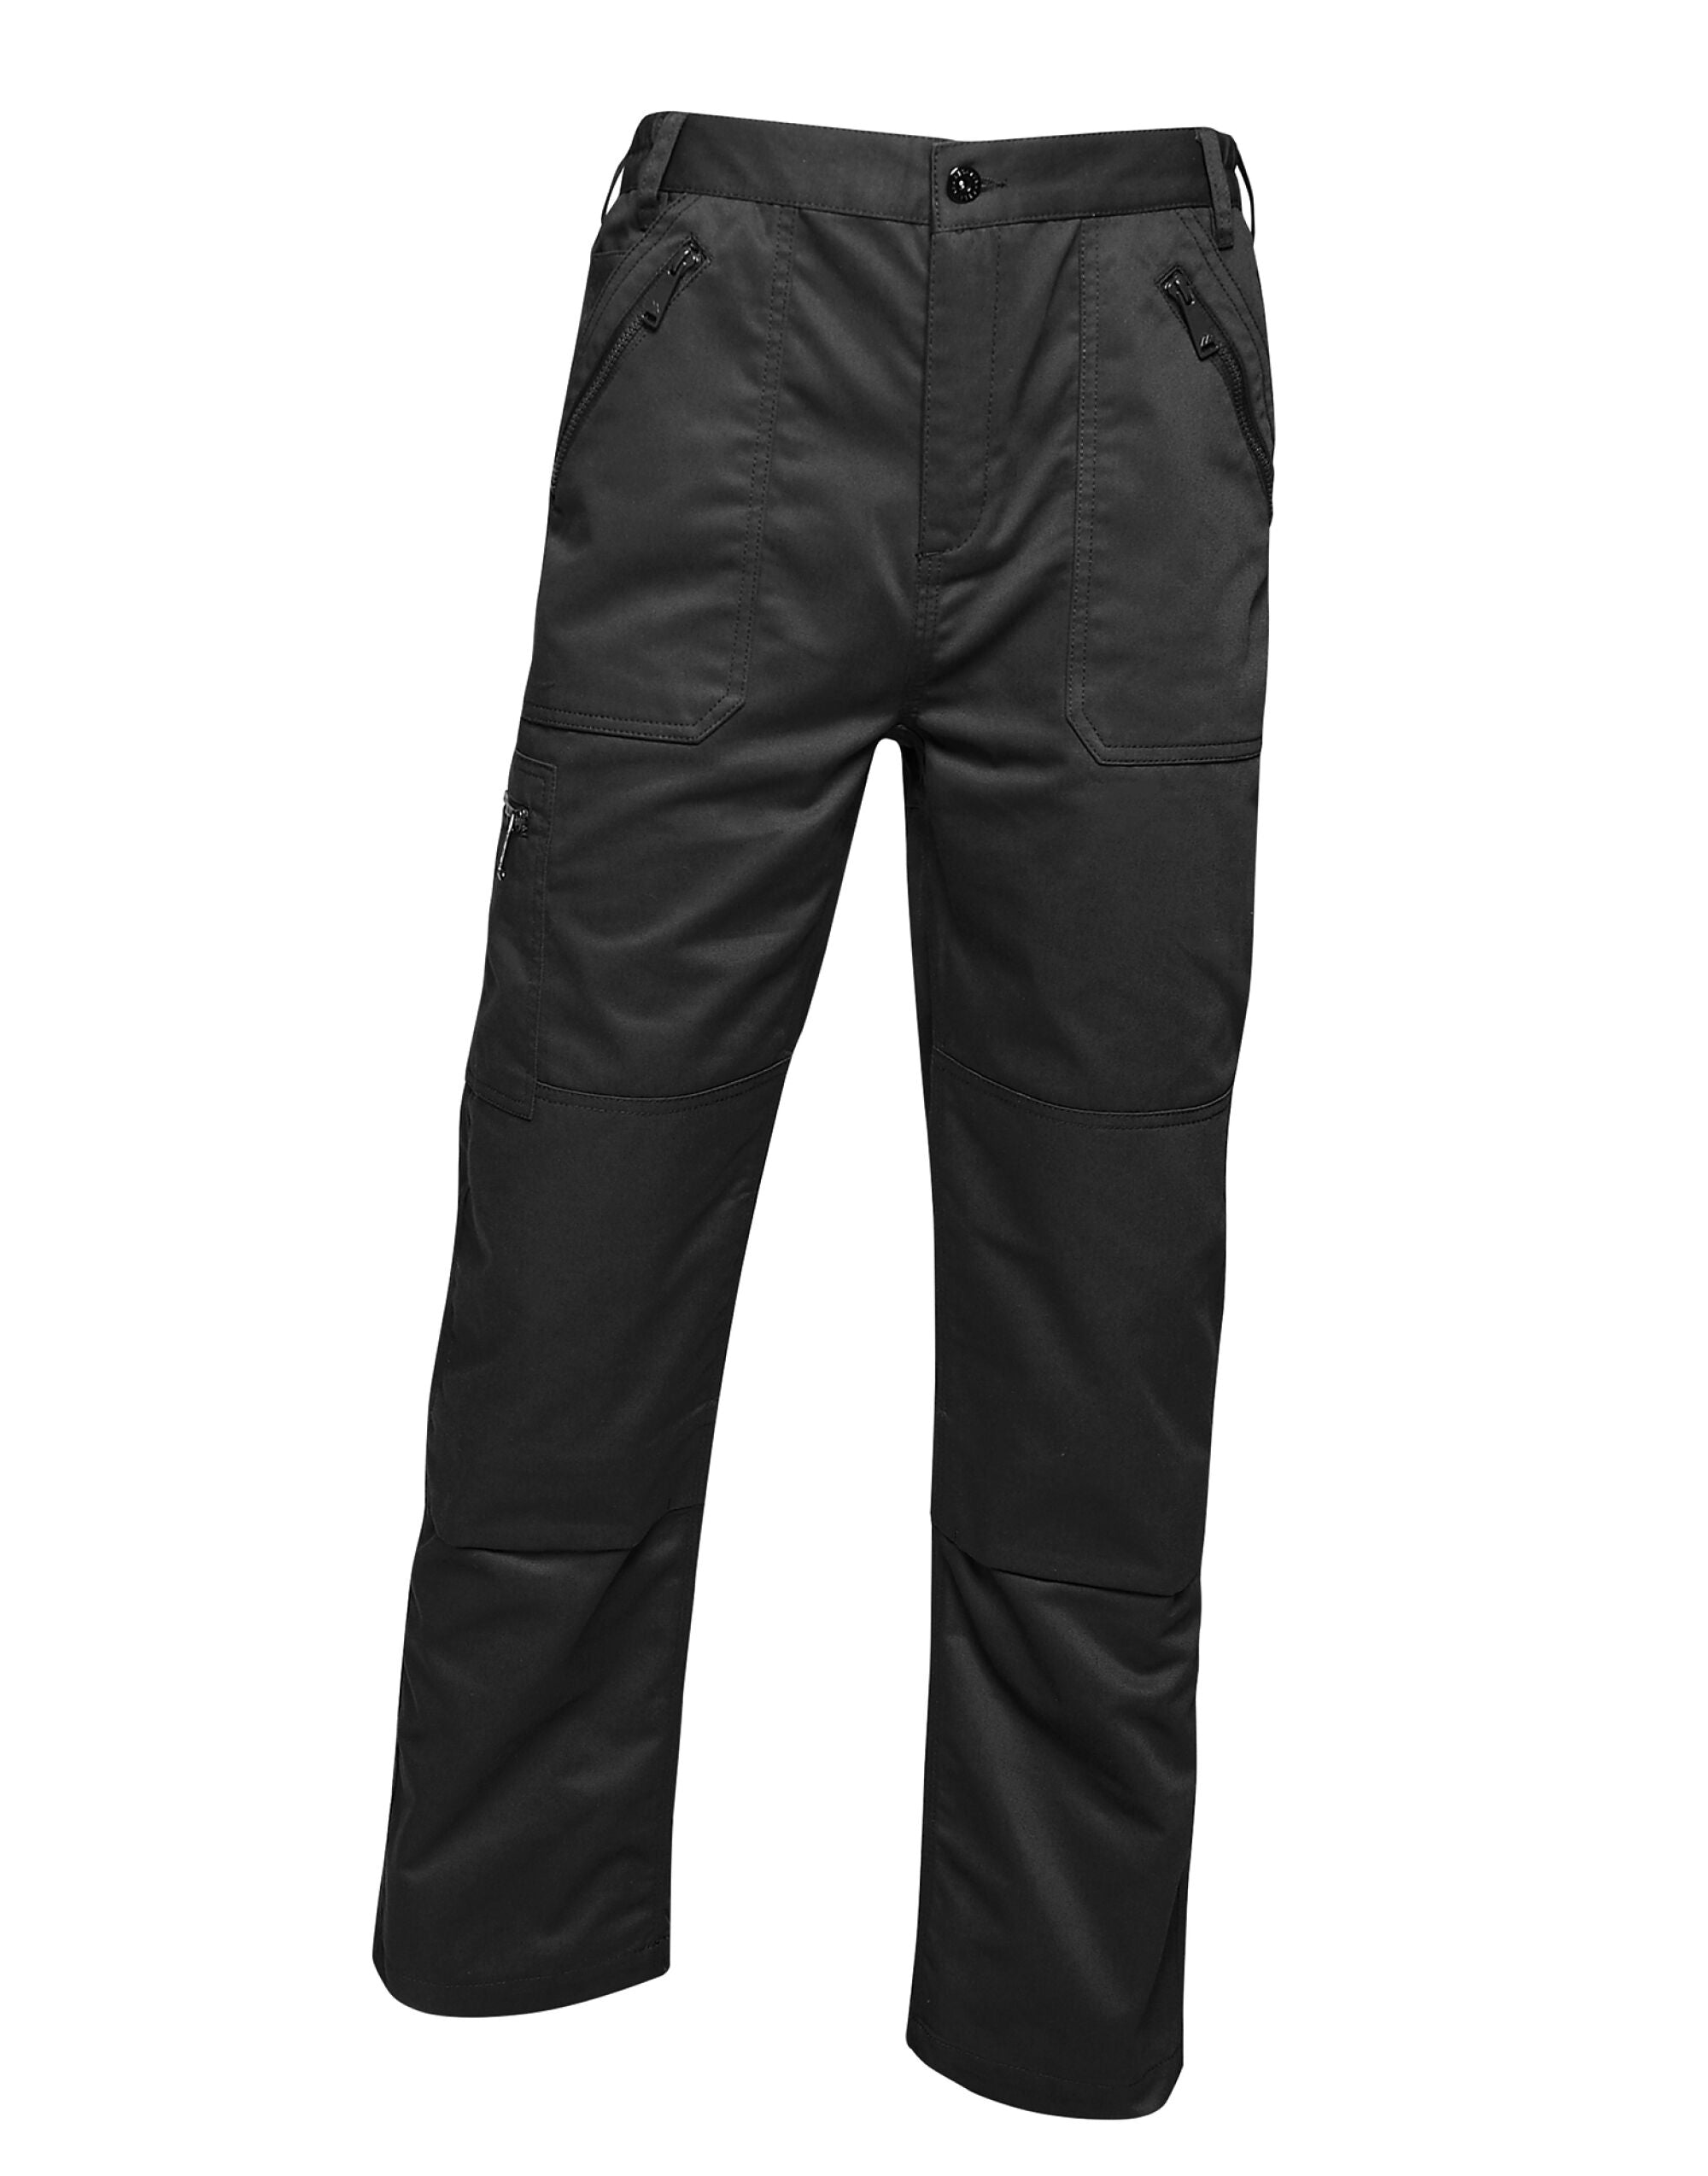 REGATTA PROFESSIONAL Pro Action Trousers (S) Durable water repellent finish (TRJ600S)